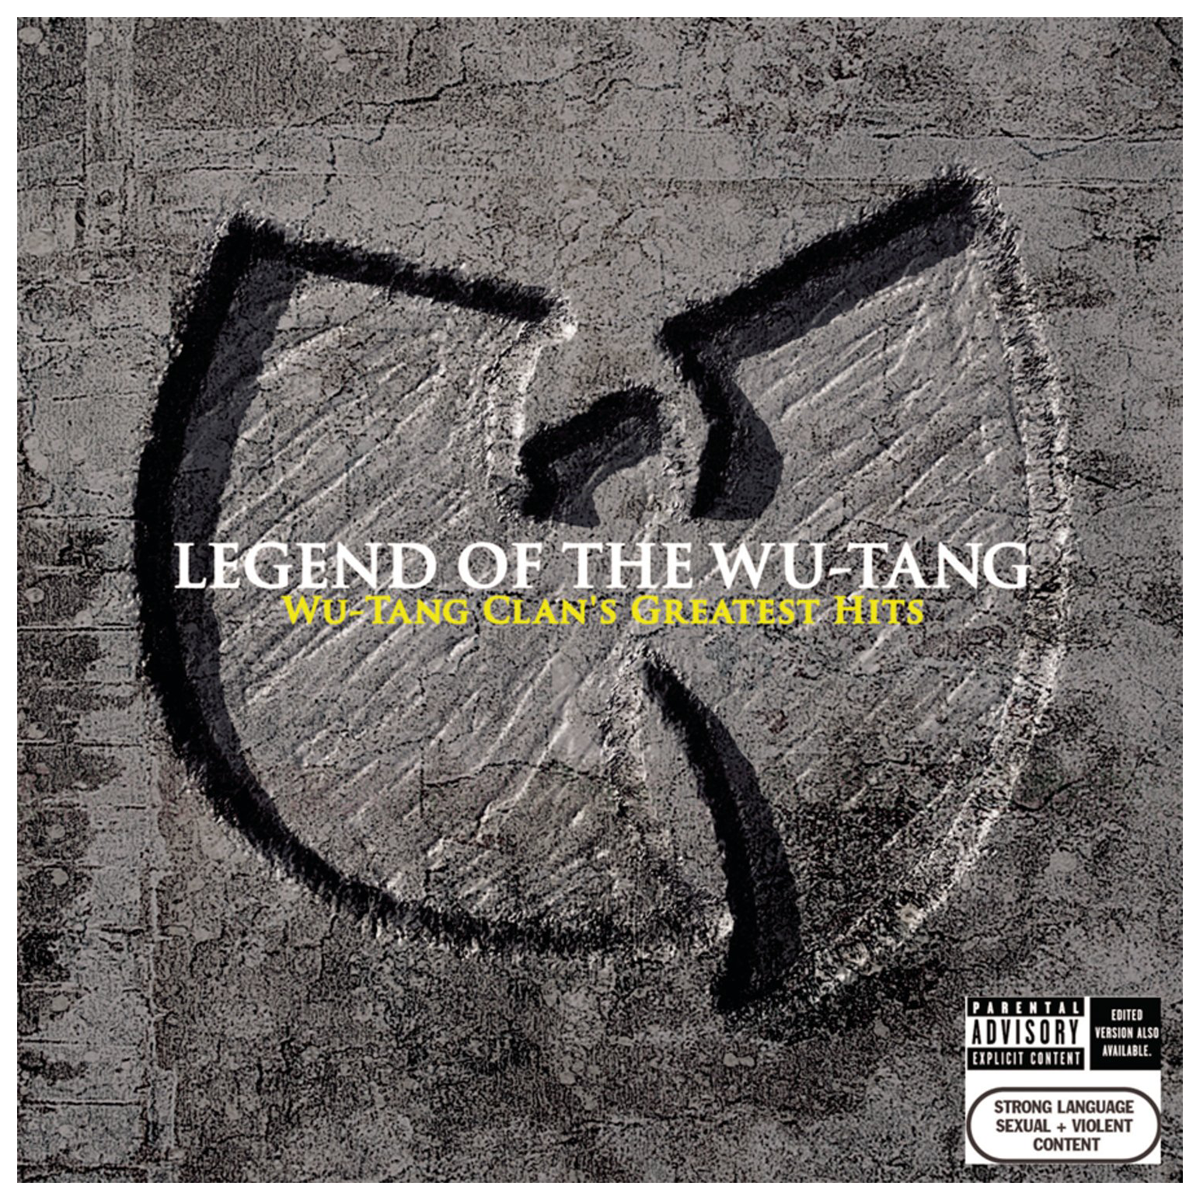 WU TANG CLAN - DA MYSTERY OF CHESSBOXIN